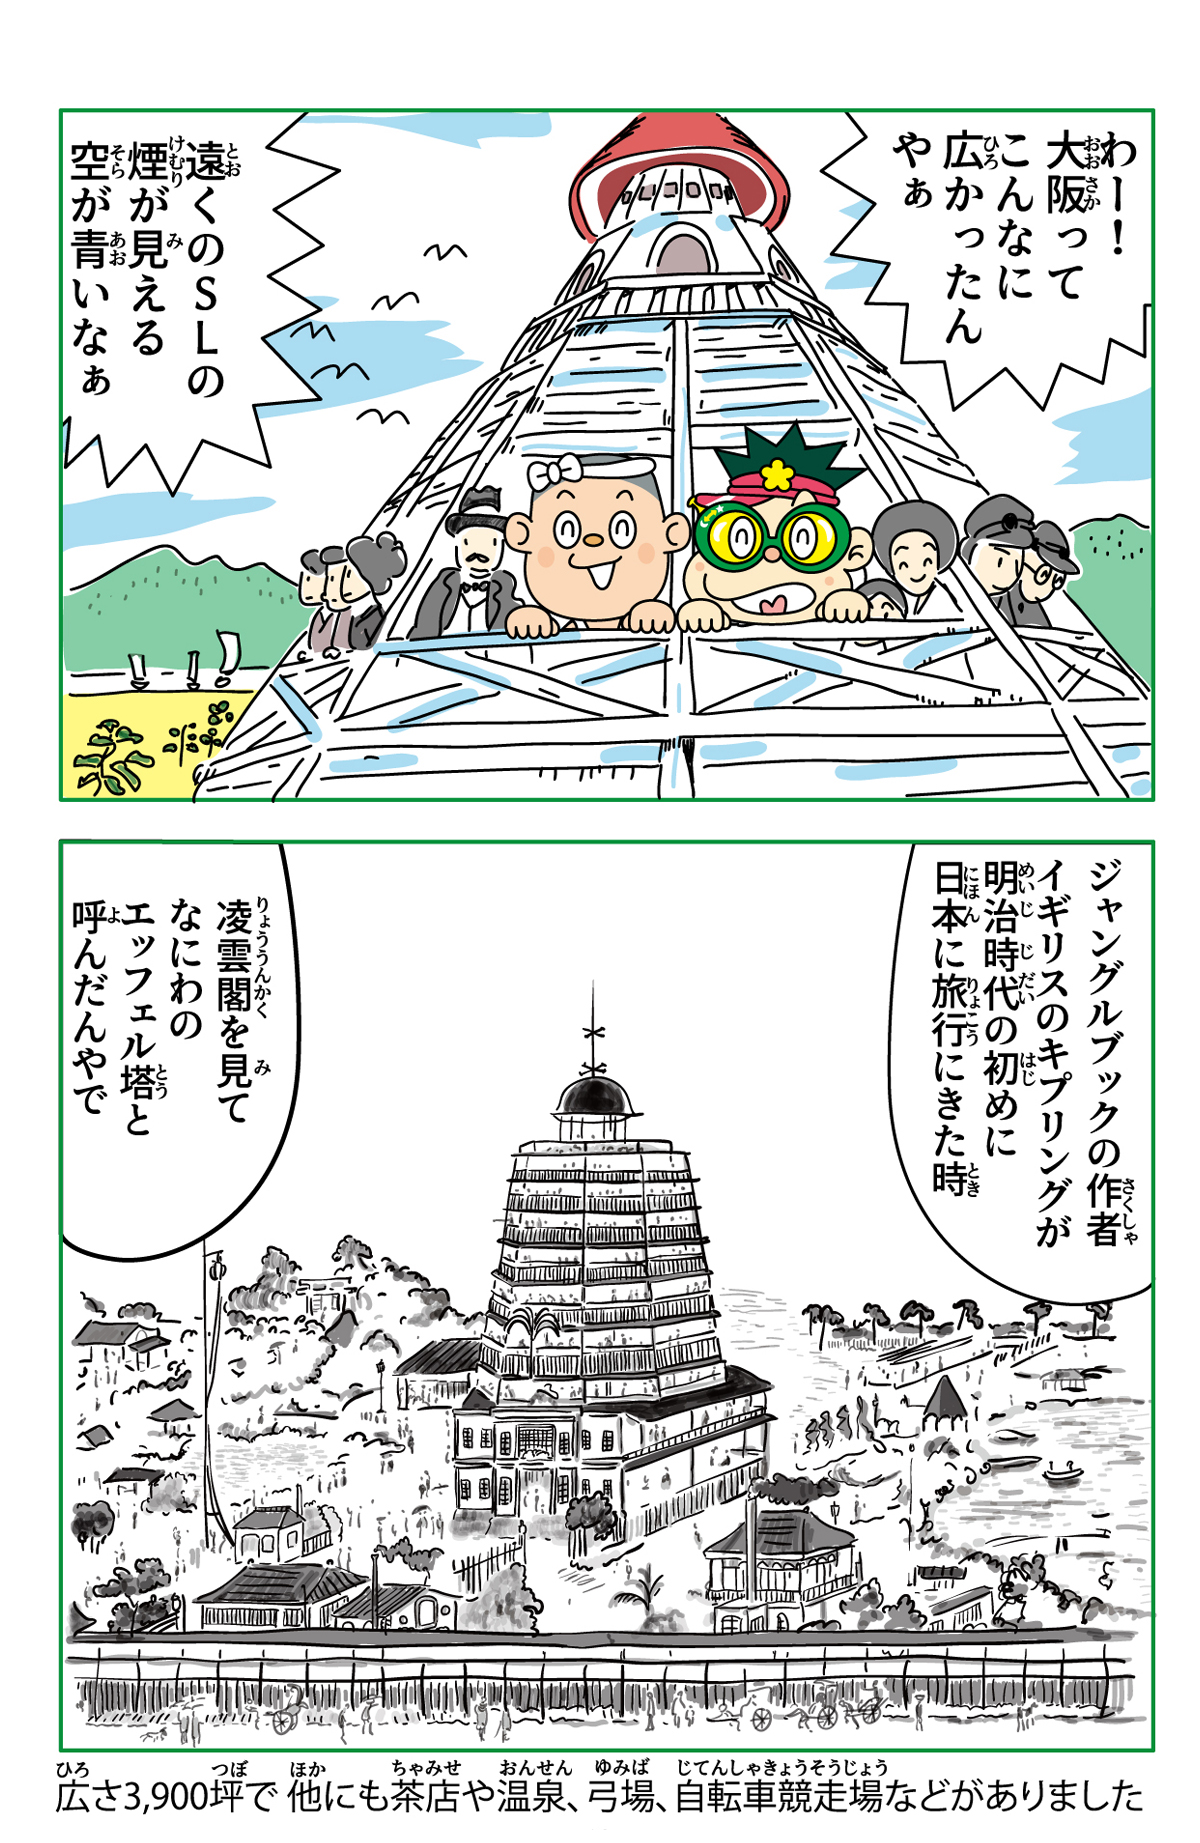 凌雲閣跡の歴史漫画 3